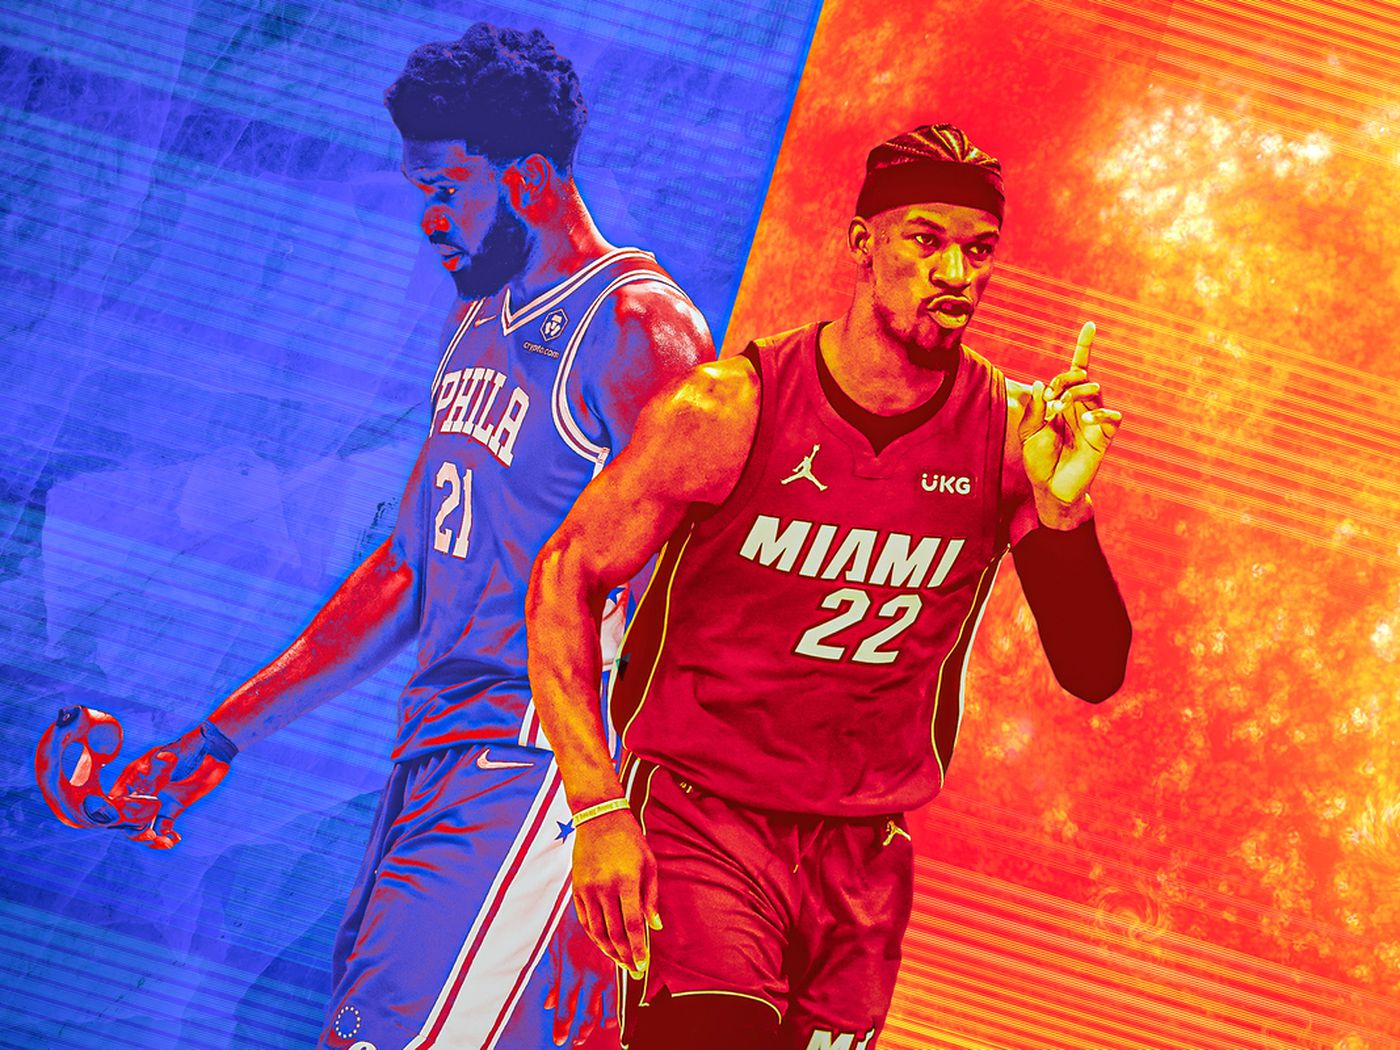 Danny Green - Philadelphia 76ers - Game-Issued City Edition Jersey - 2021-22  NBA Season